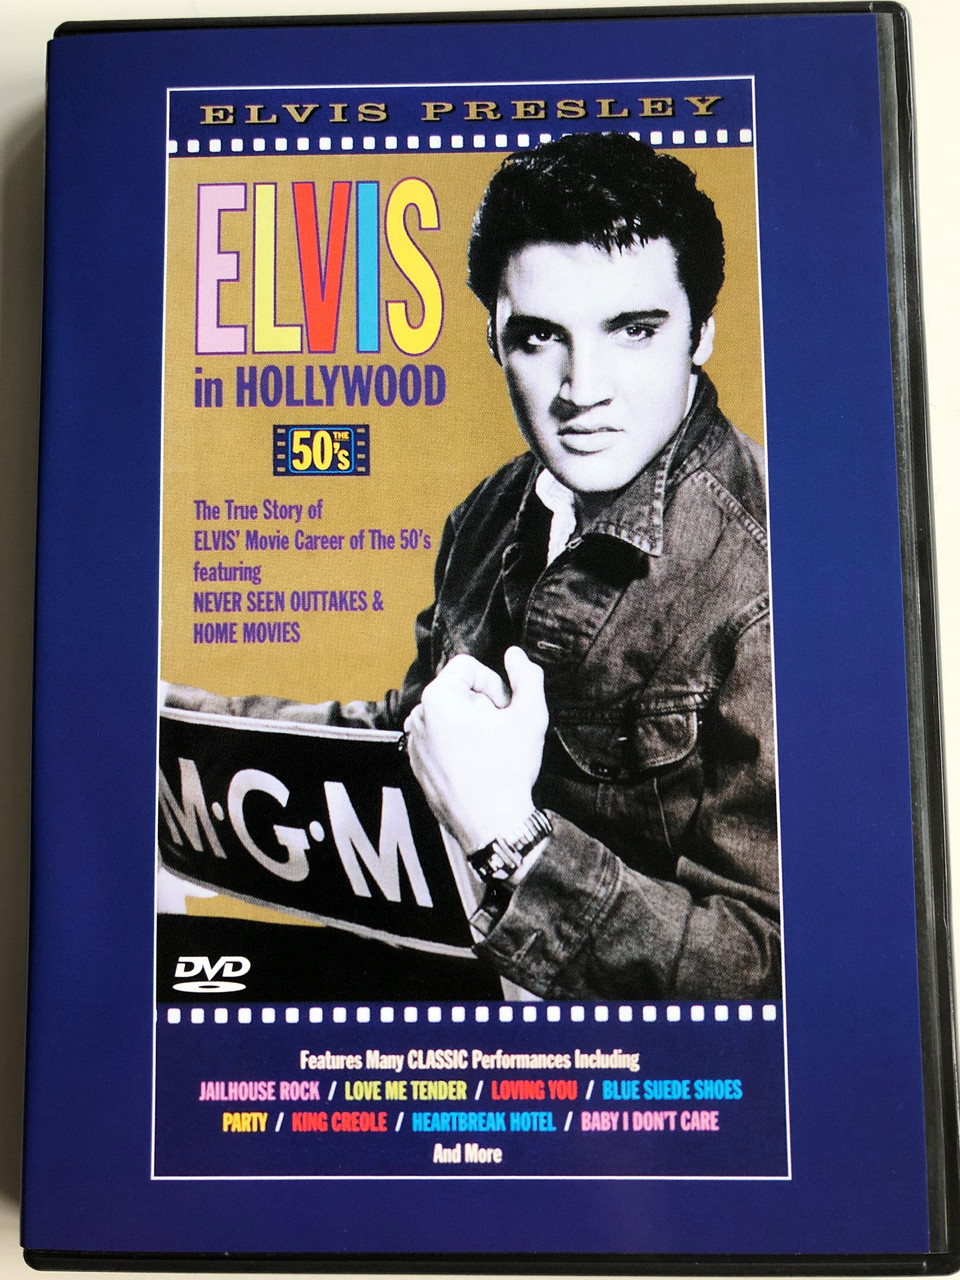 Elvis in Hollywood - 50's DVD 2000 / Directed by Frank Martin / Inside look  at Elvis Presley's movie career of the 50's - bibleinmylanguage